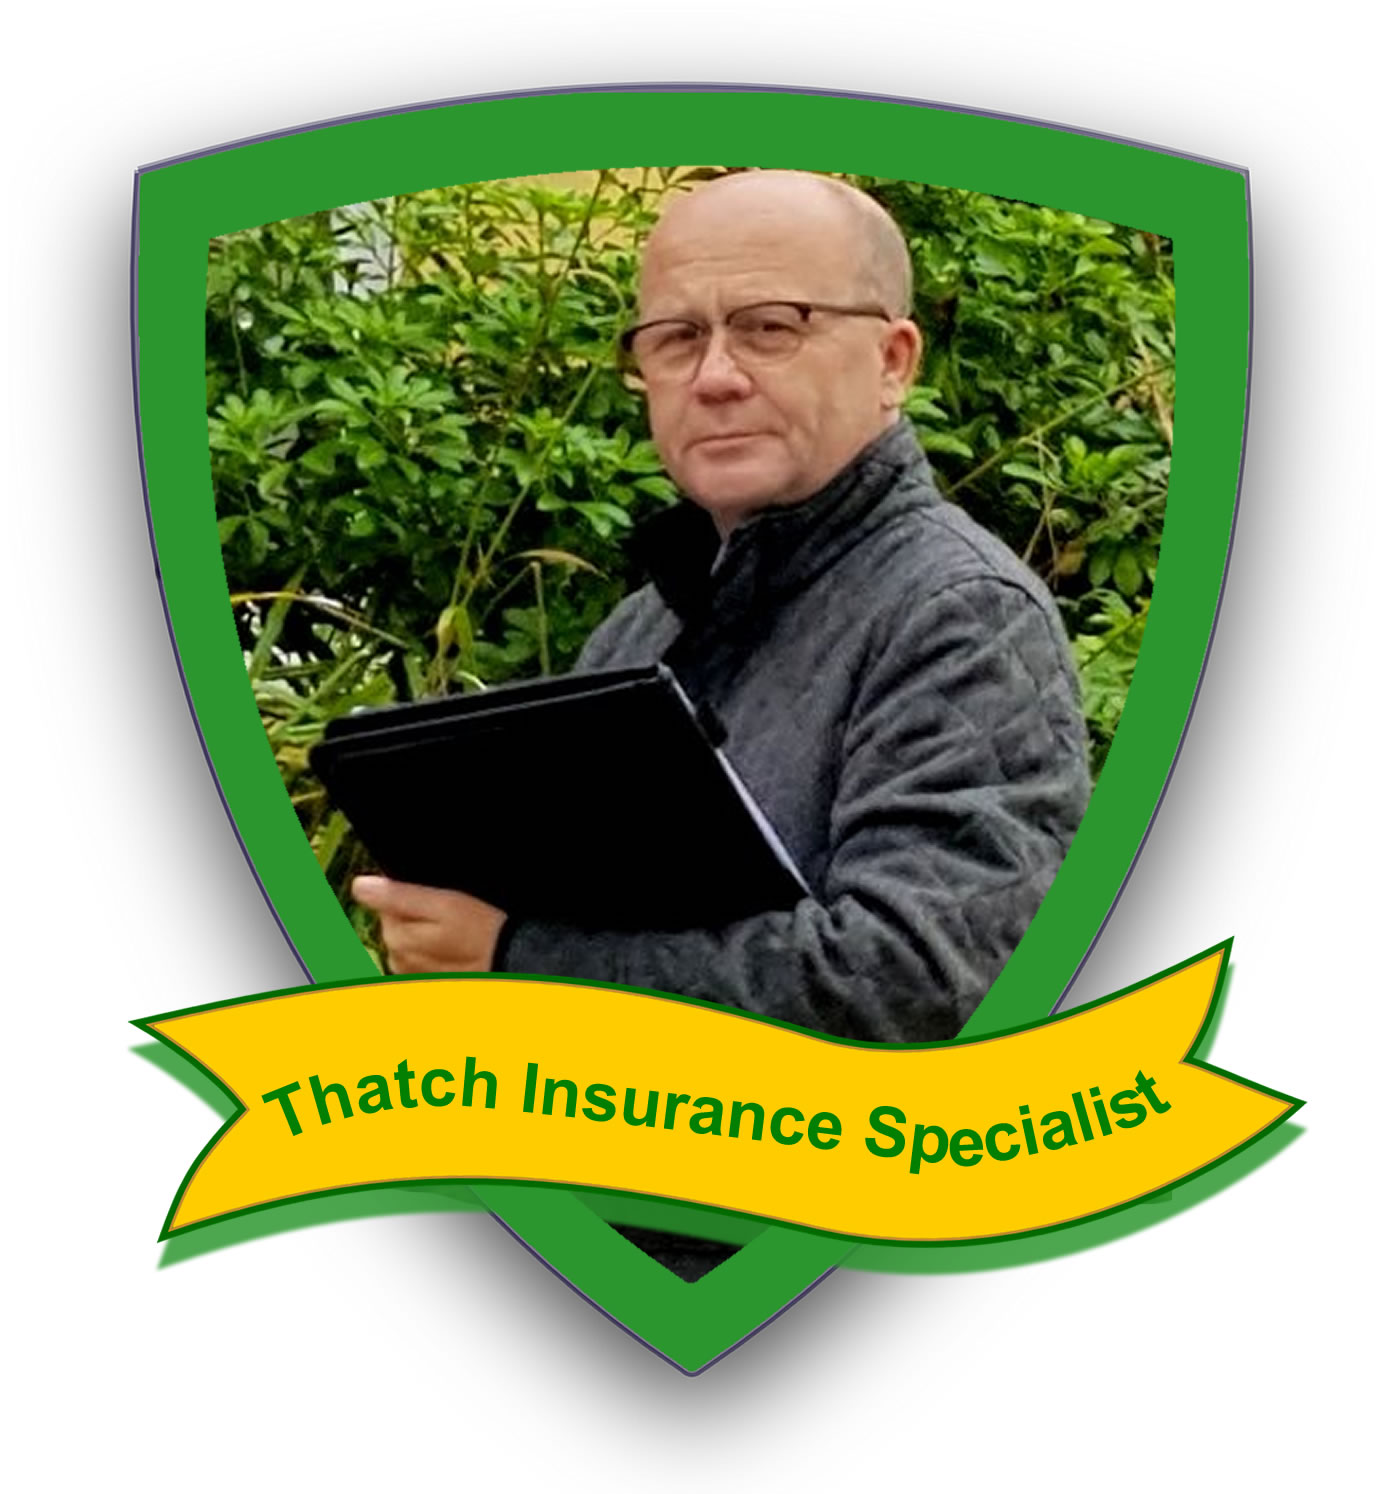 Thatch Shield Ltd